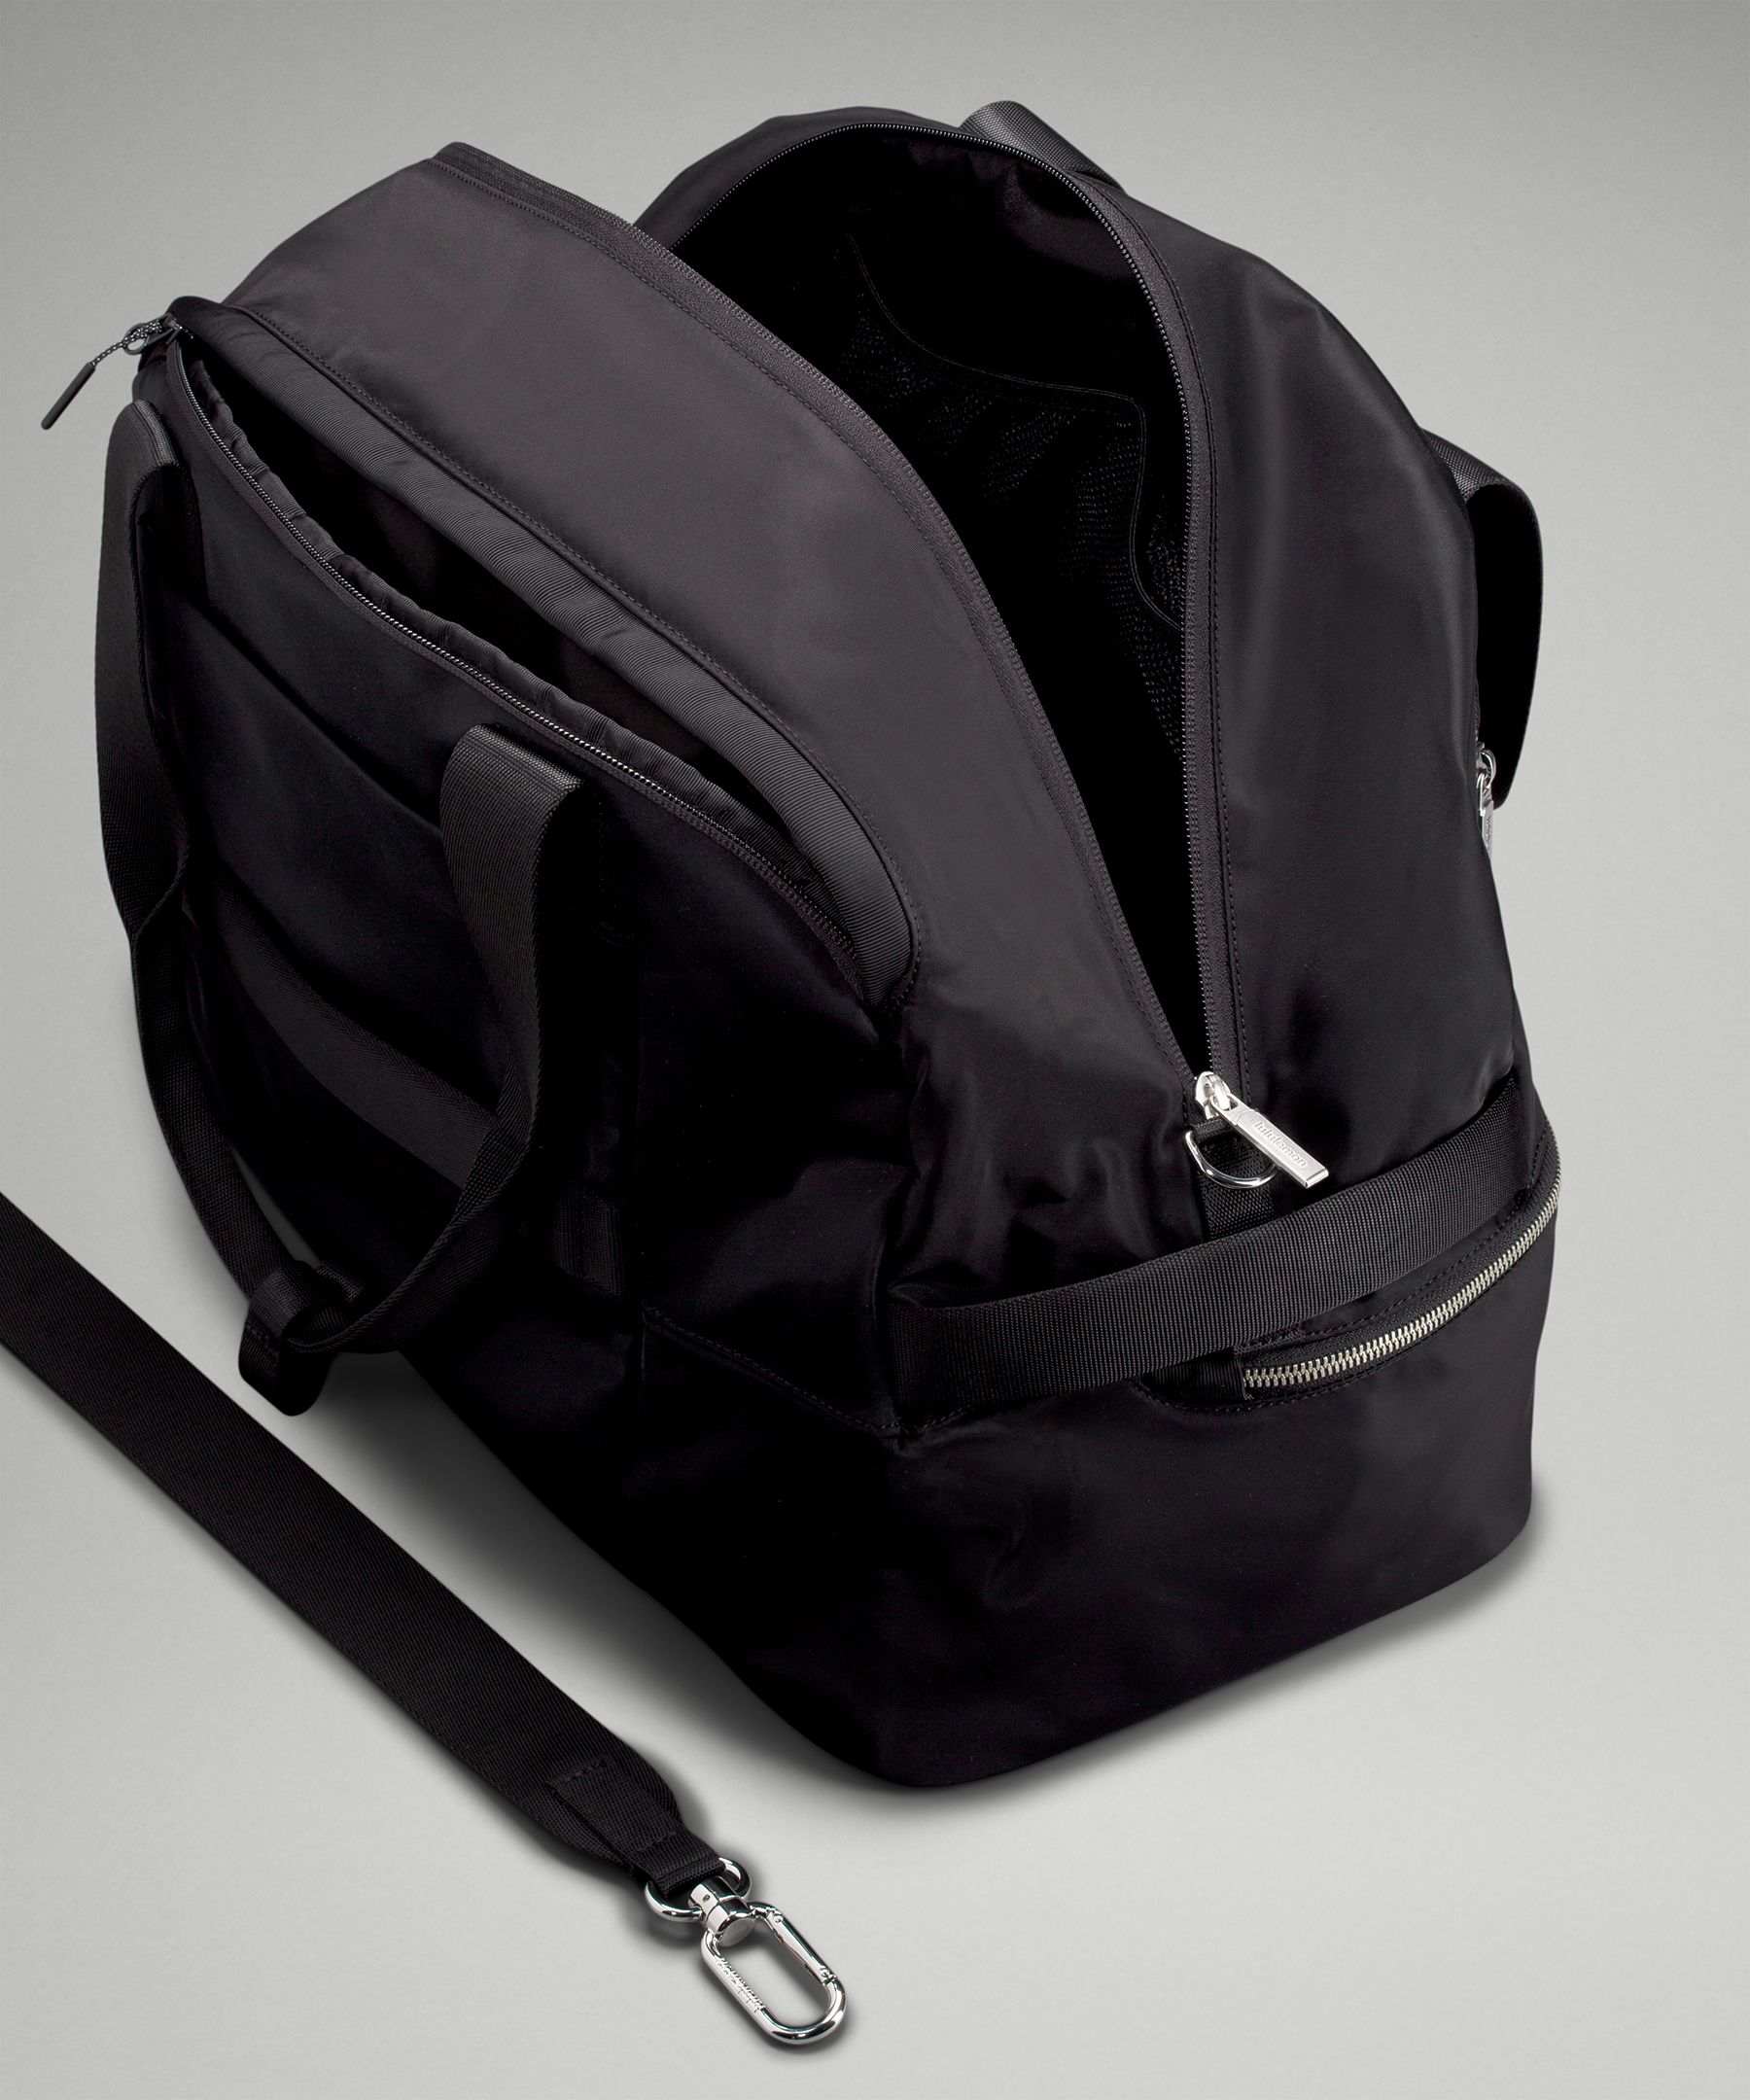 Lululemon City Adventurer Duffle Bag 29L - Black